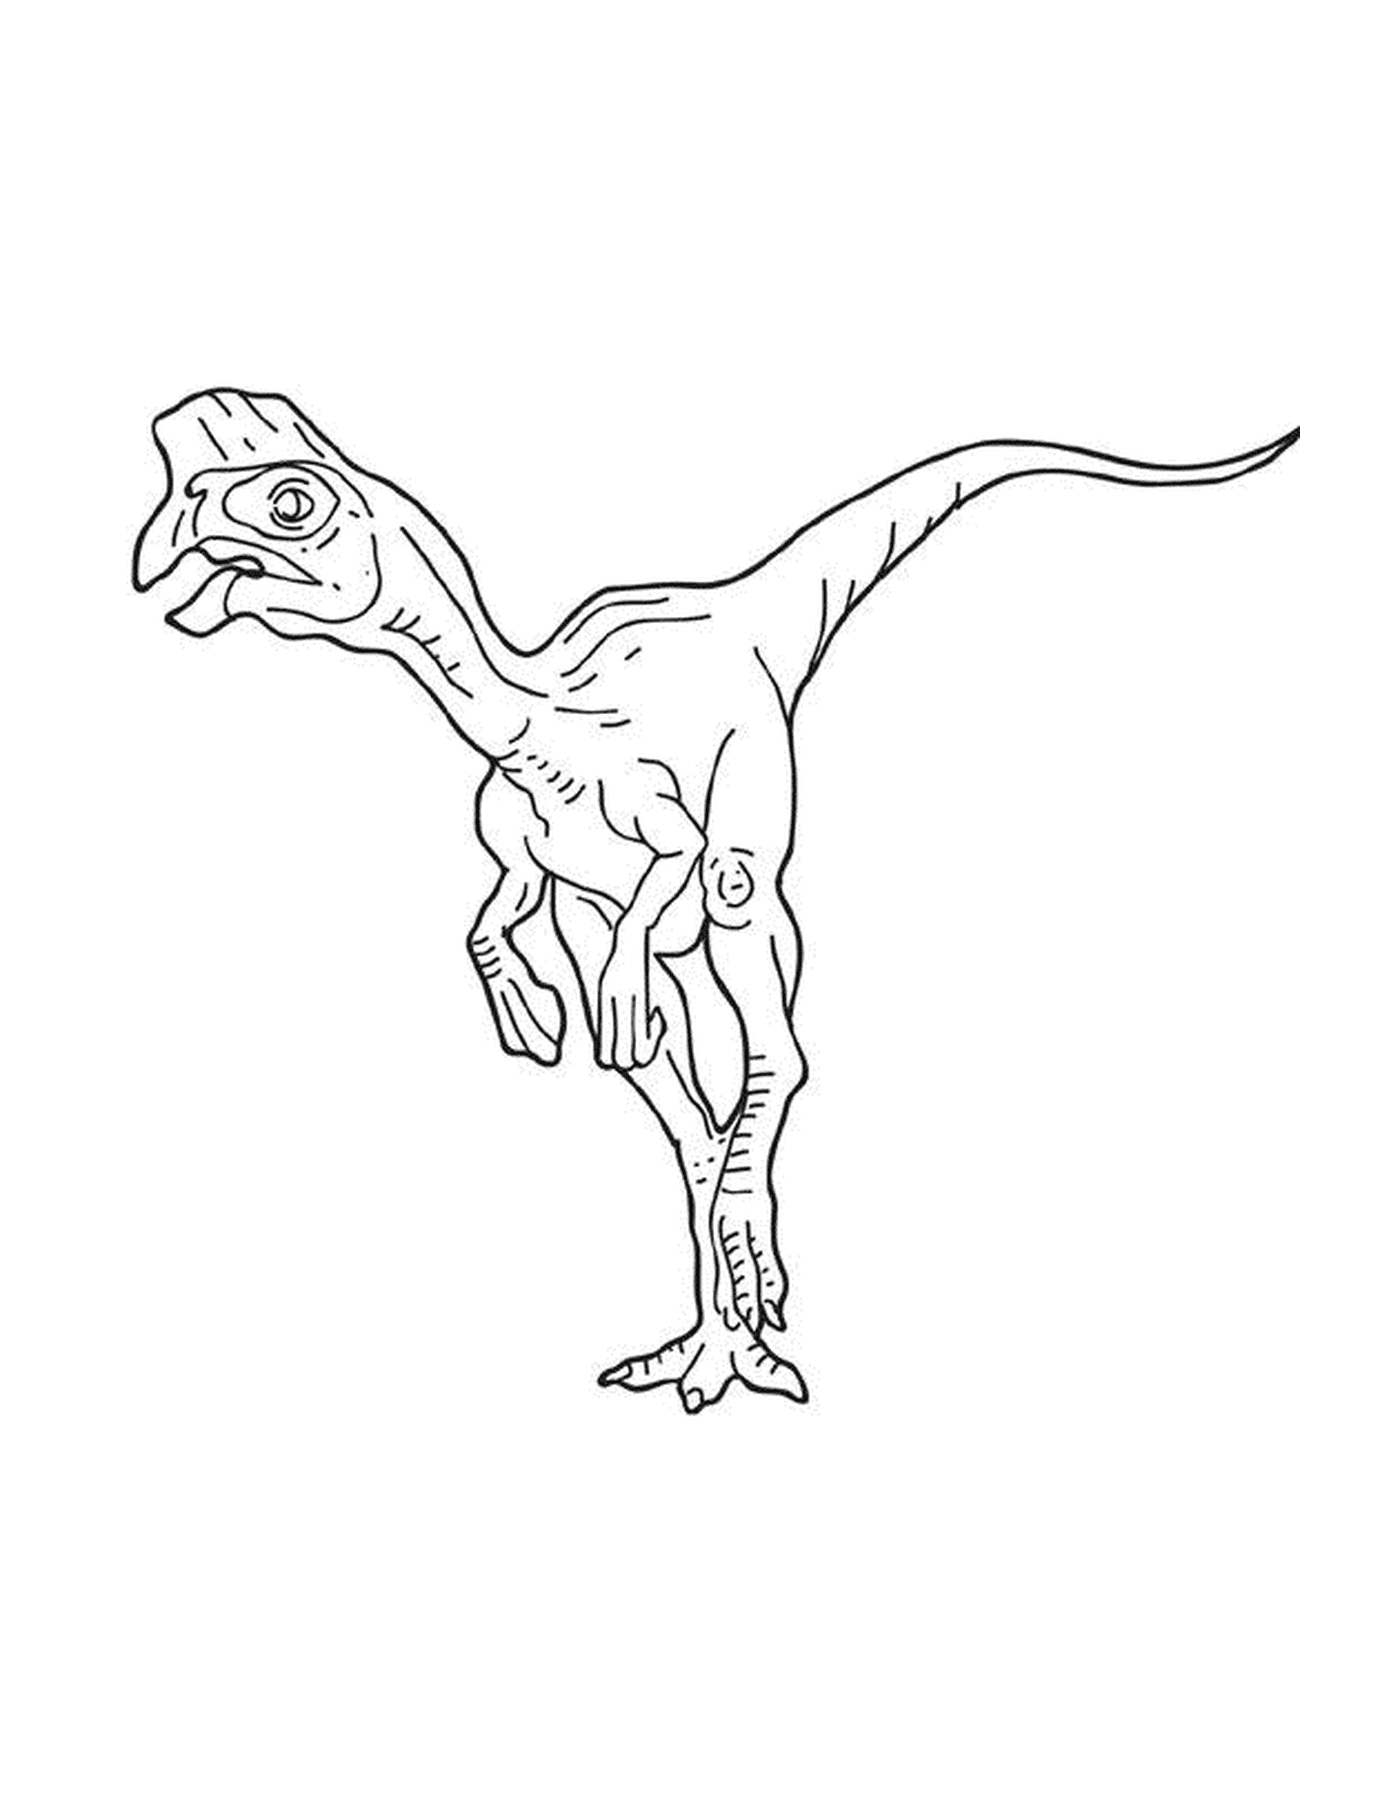  A standing oviraptor dinosaur 